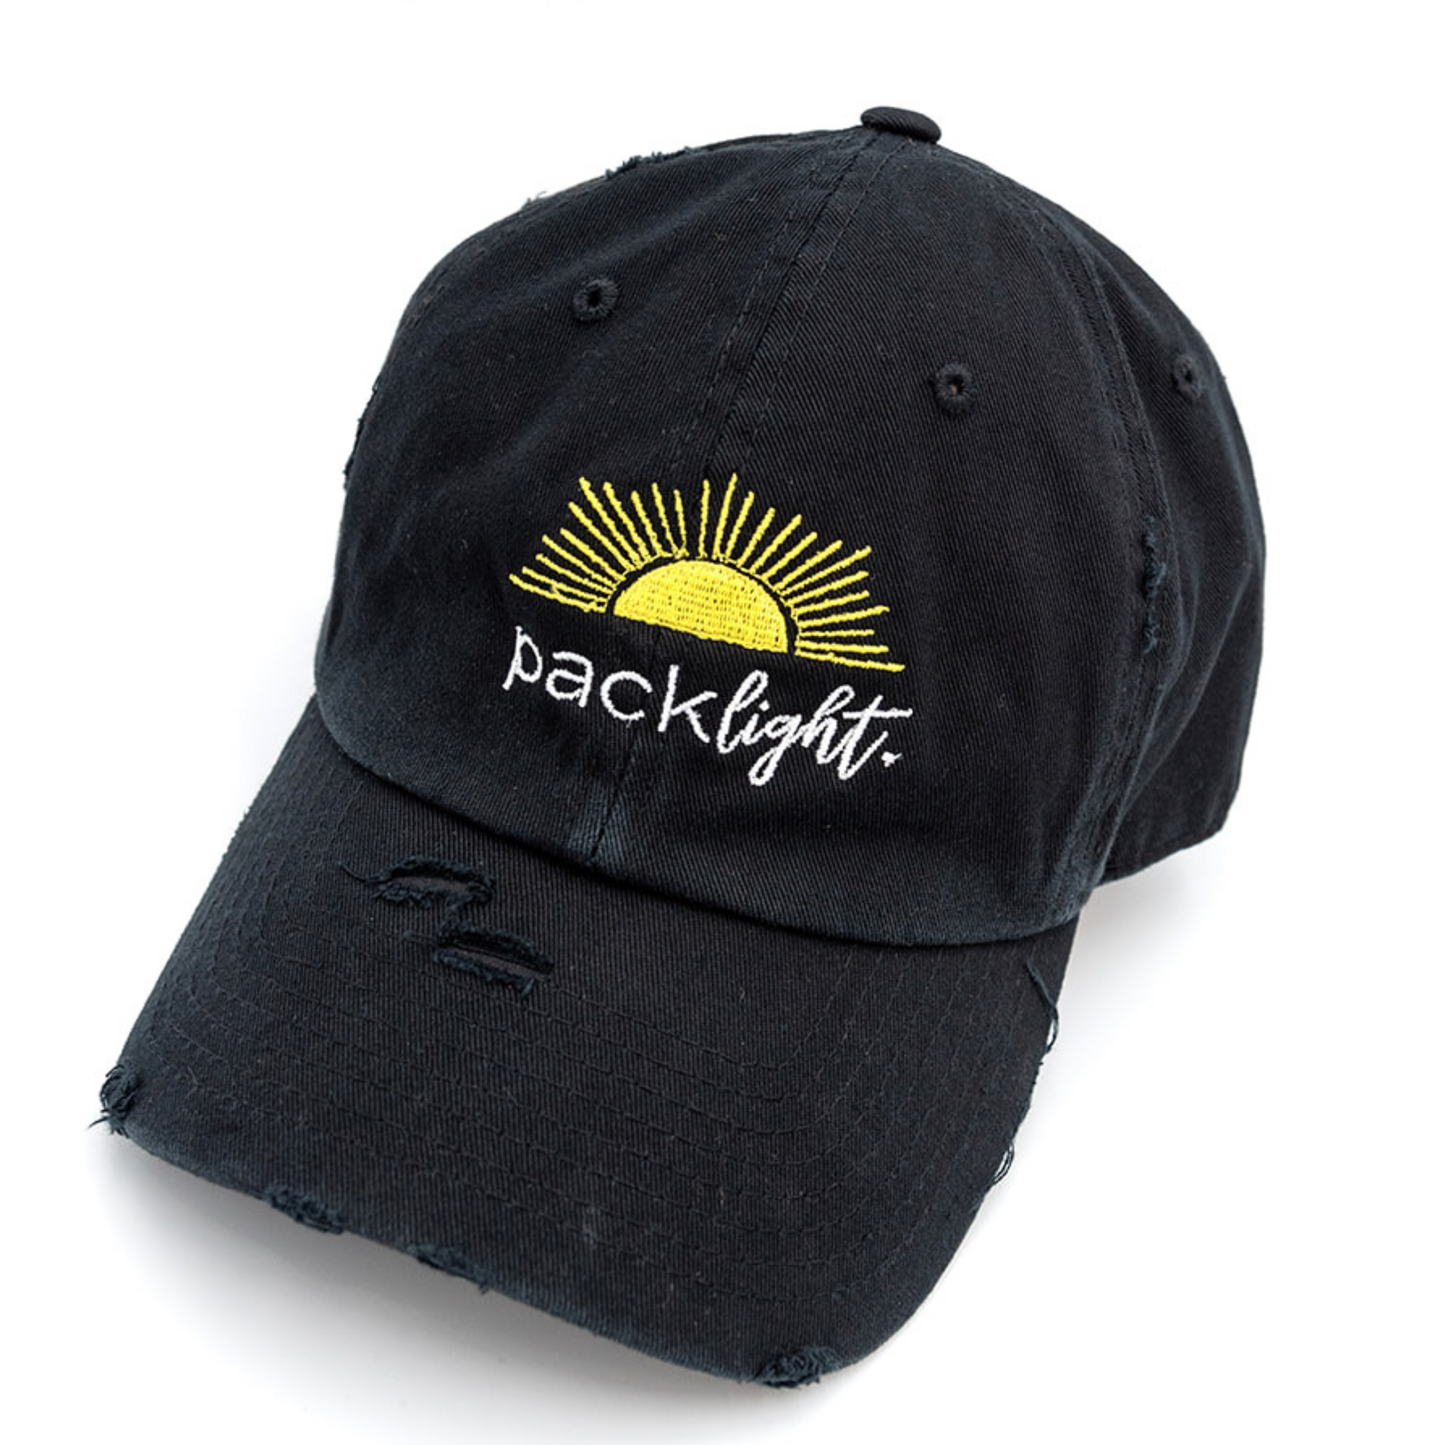  black sun pack light affirmation cap dat hat from sol rise essentials